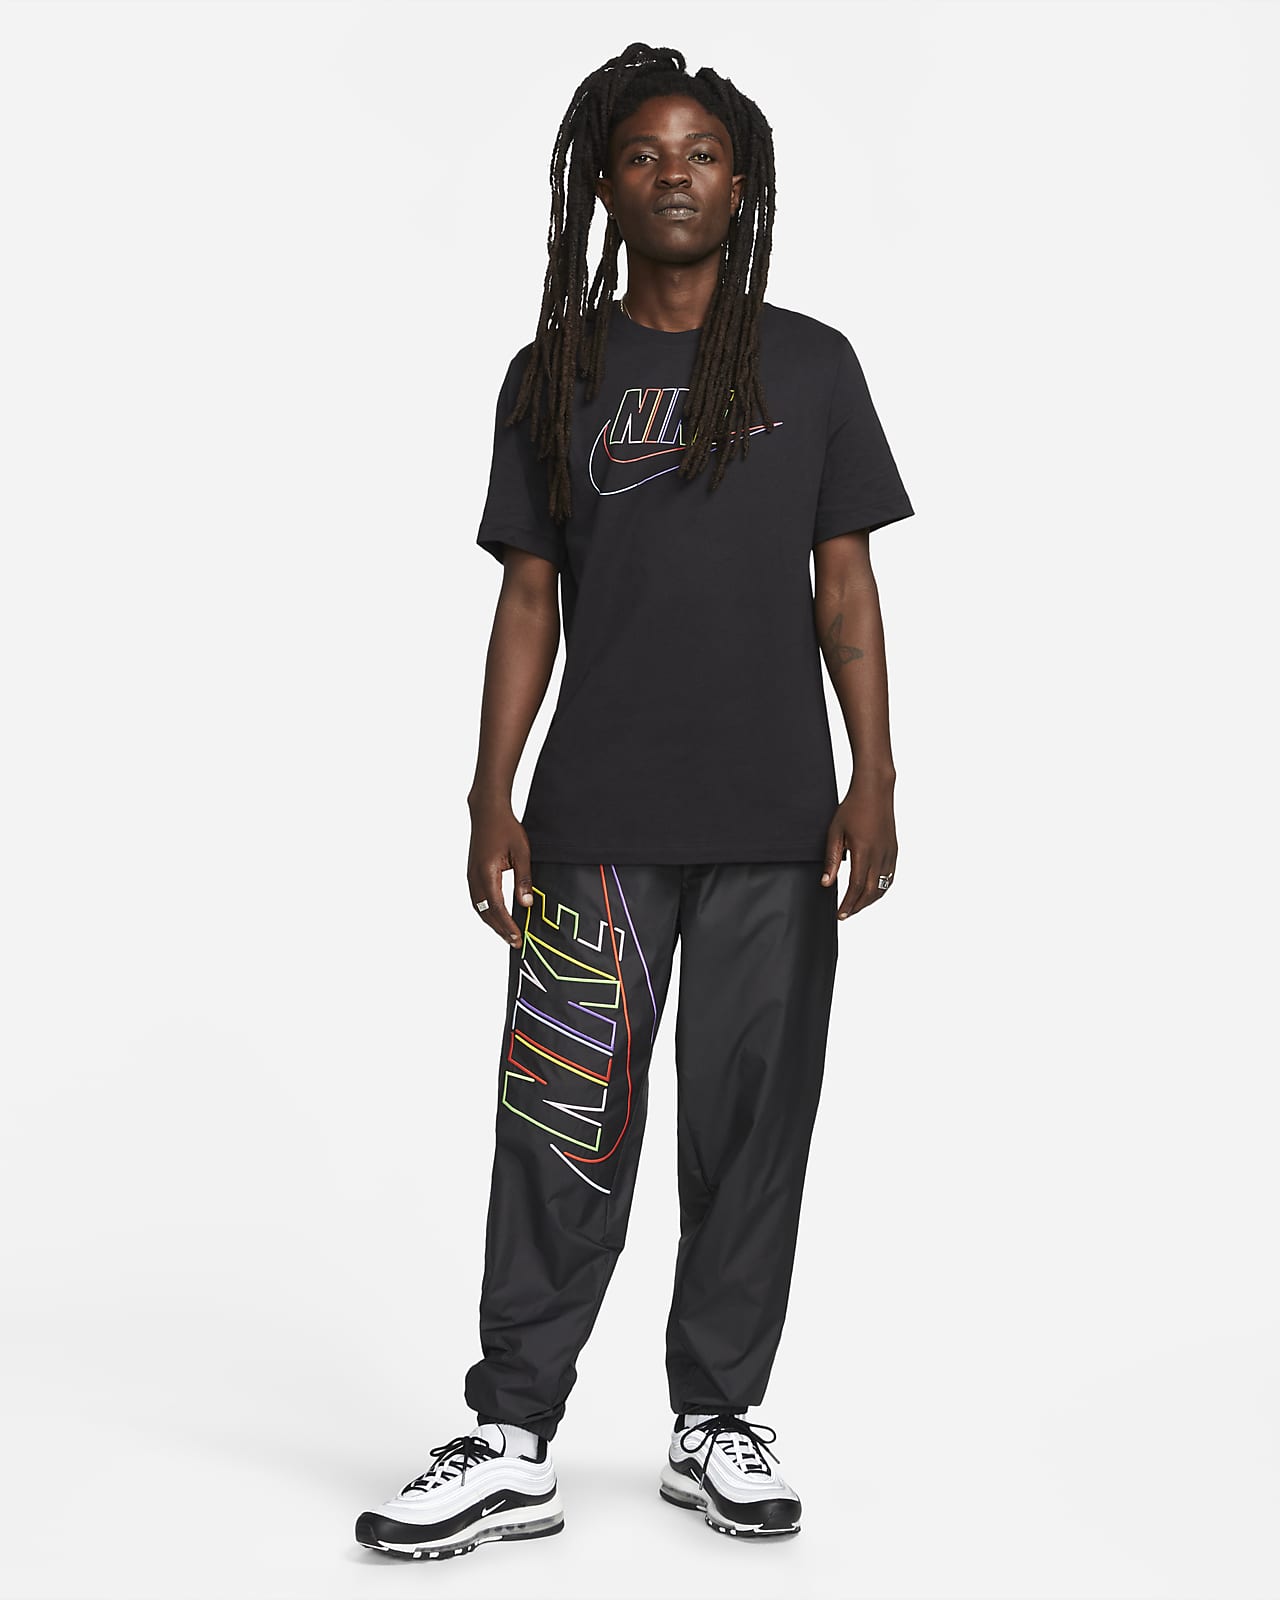 Buy DIOTSR Mens Cargo Pants Techwear Hip Hop Harem Pant Jogger Sweatpants  with Pockets Streetwear Punk Jogging, Gray, Large at Amazon.in